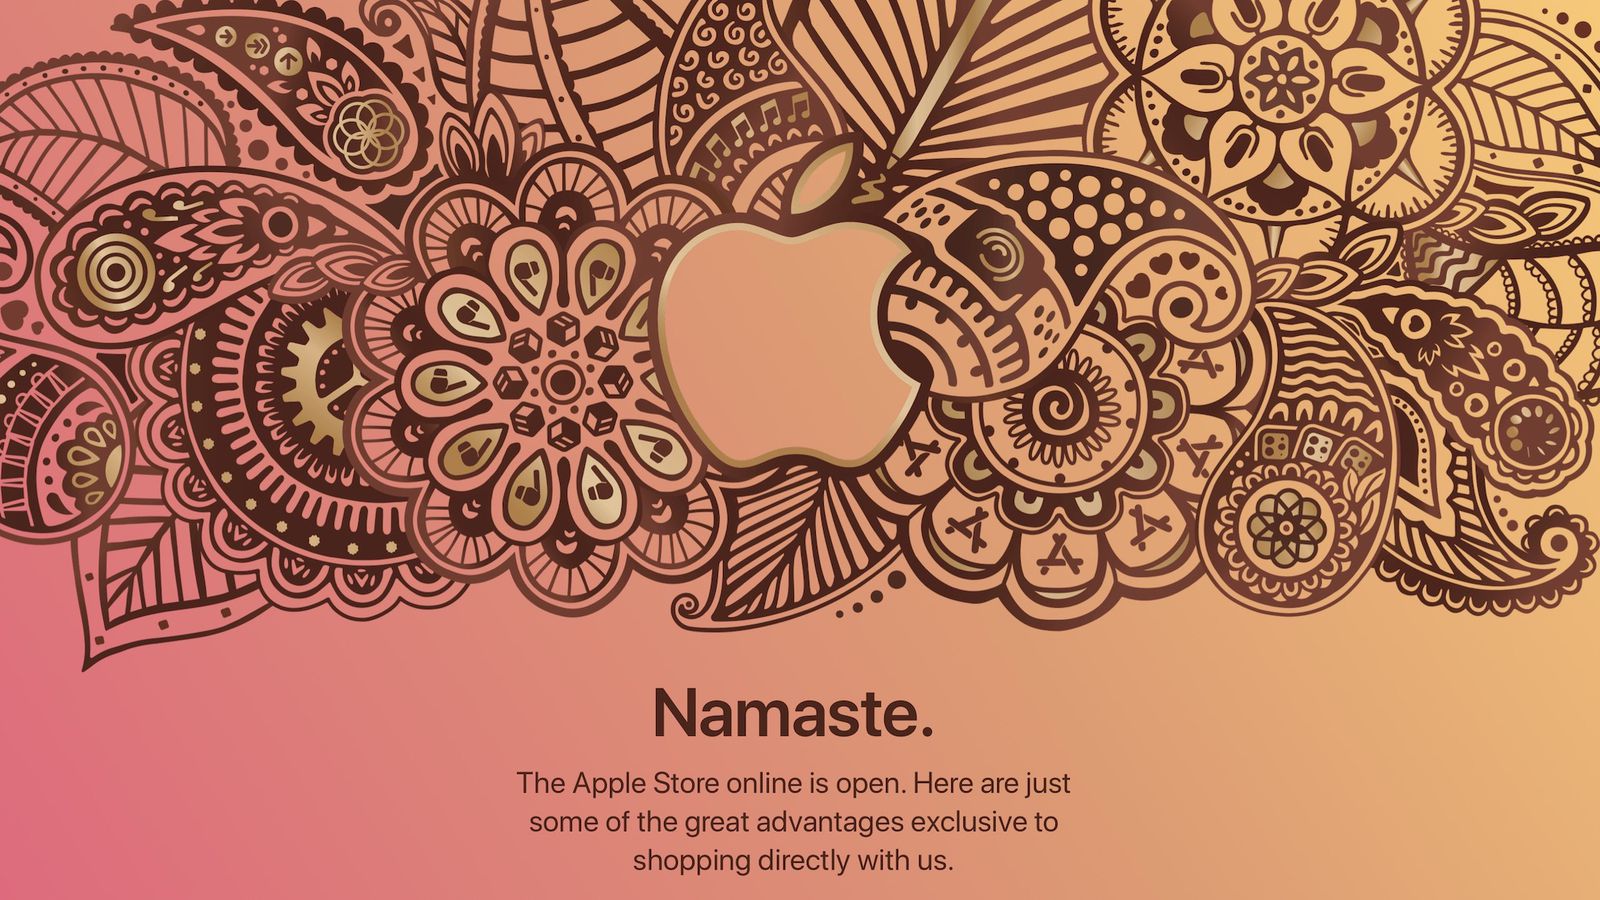 Az Apple indiai törekvései